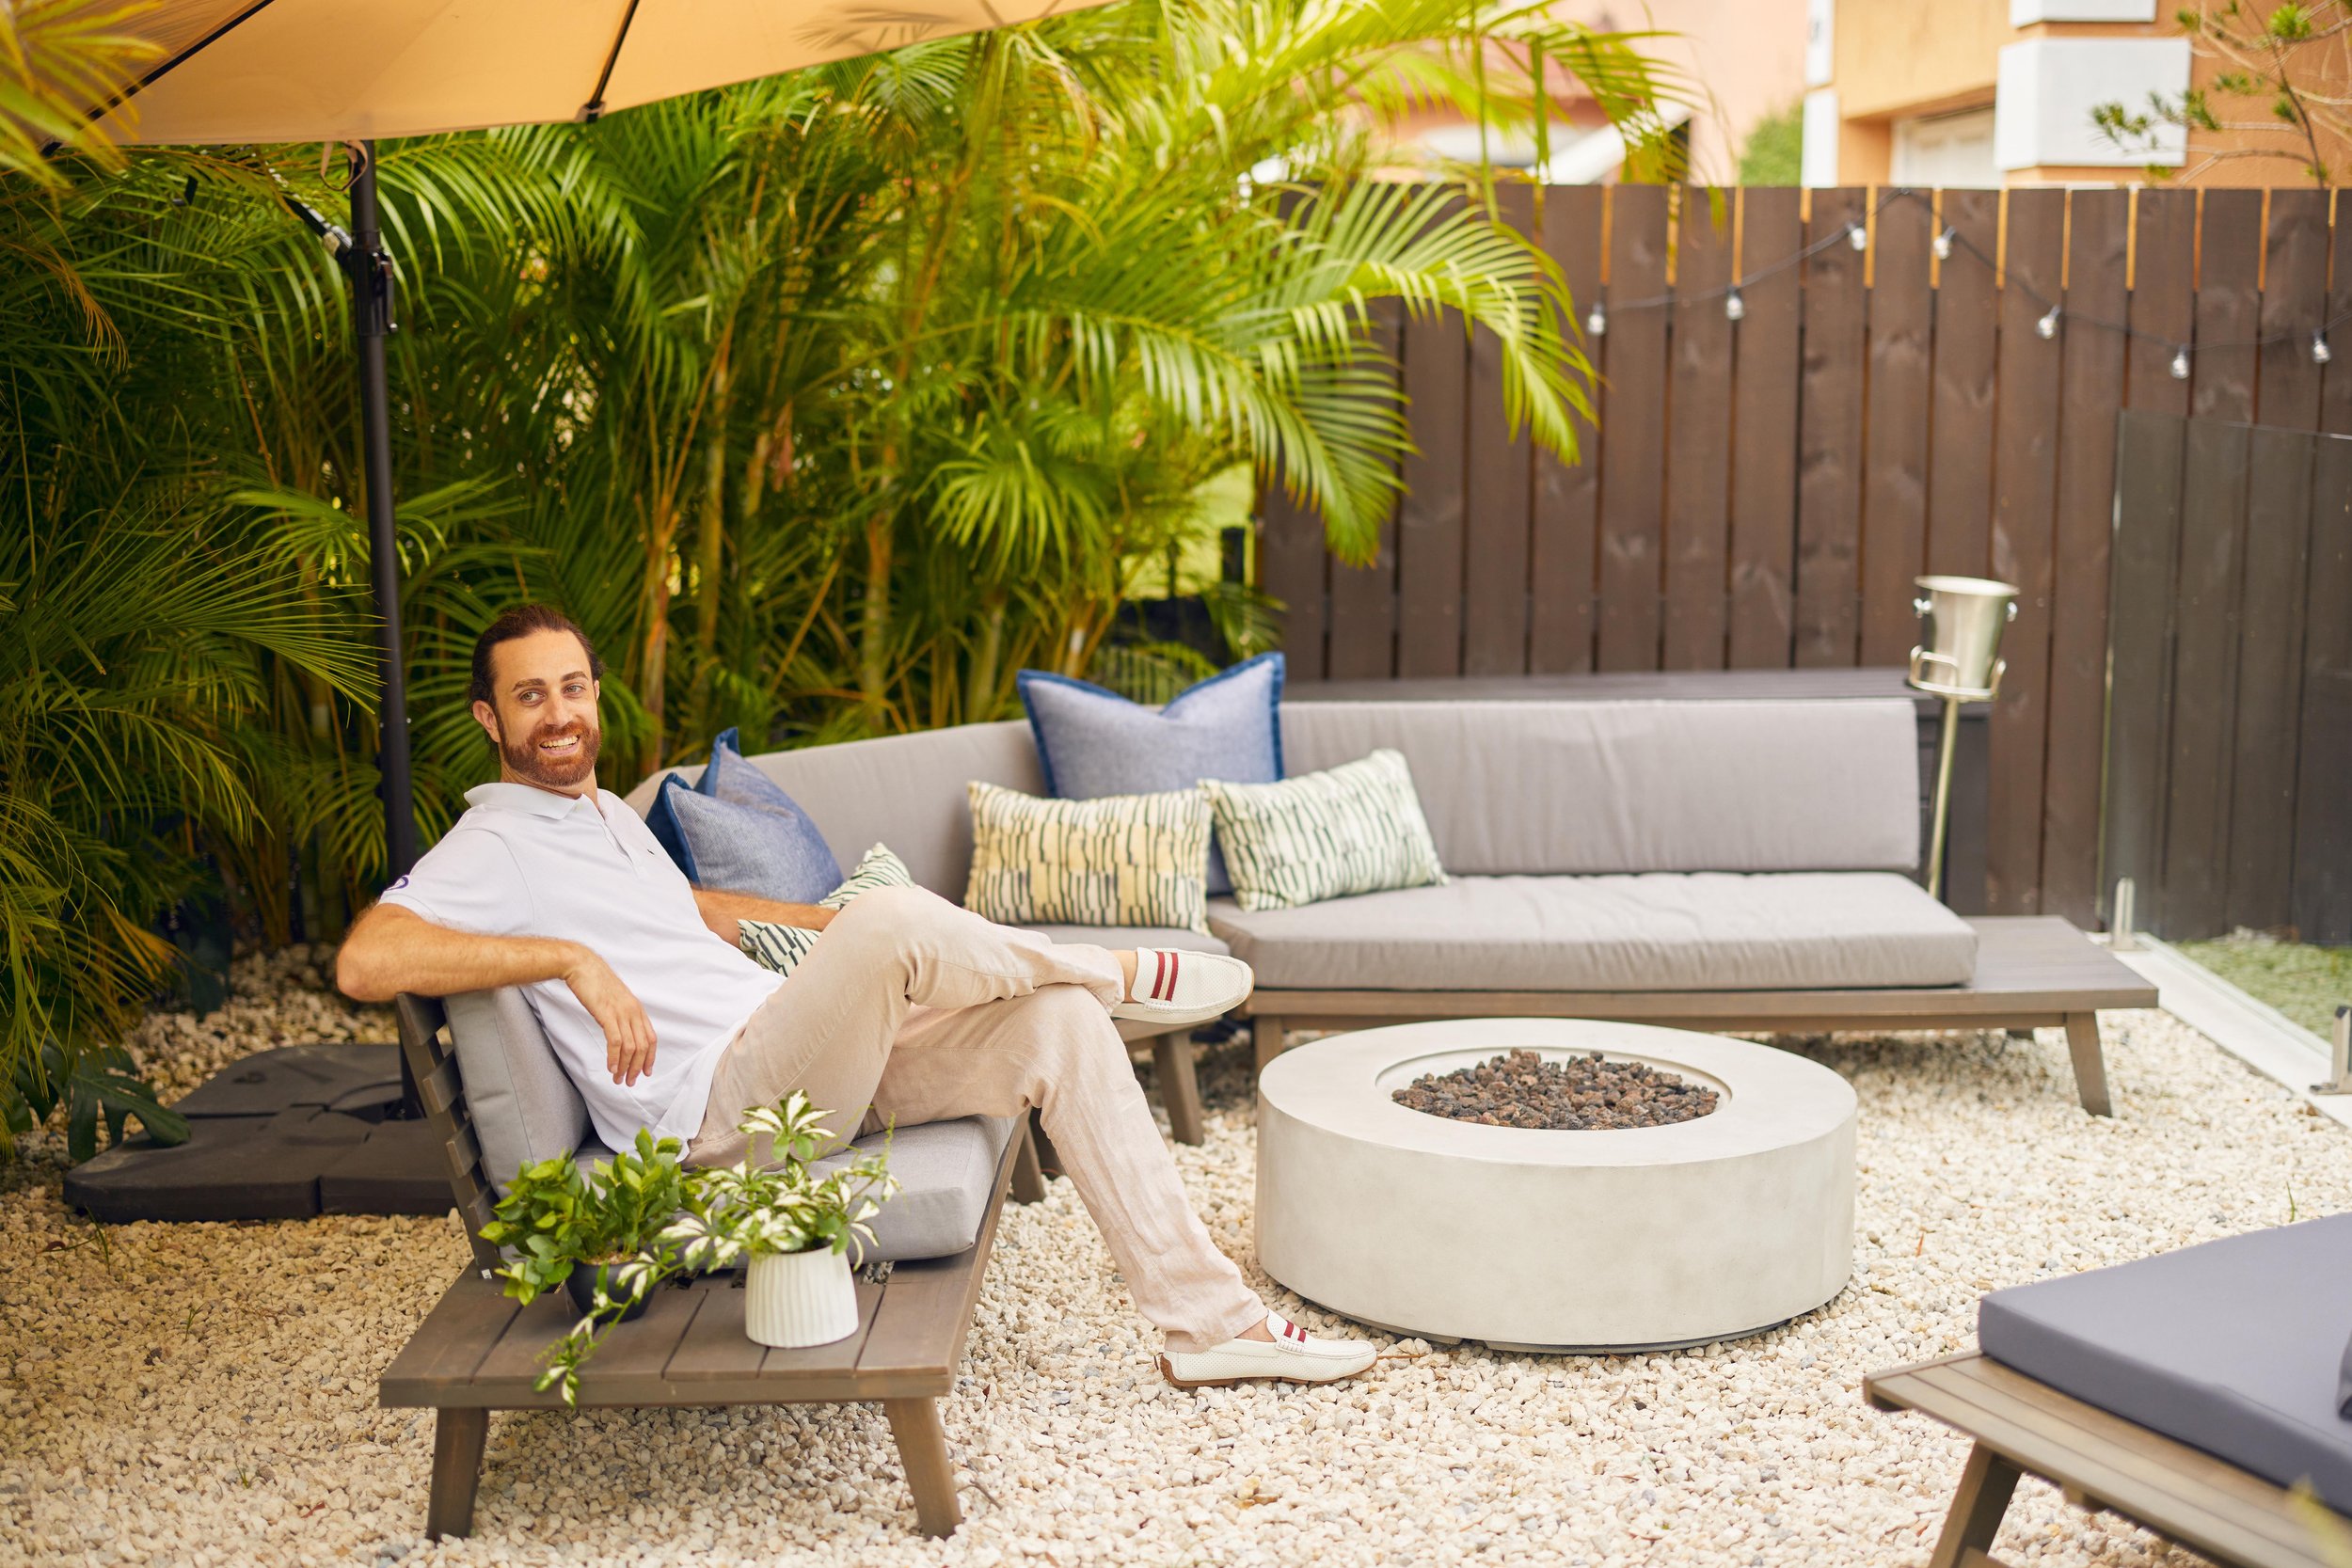 Yardzen client enjoys outdoor fire pit area in Miami backyard